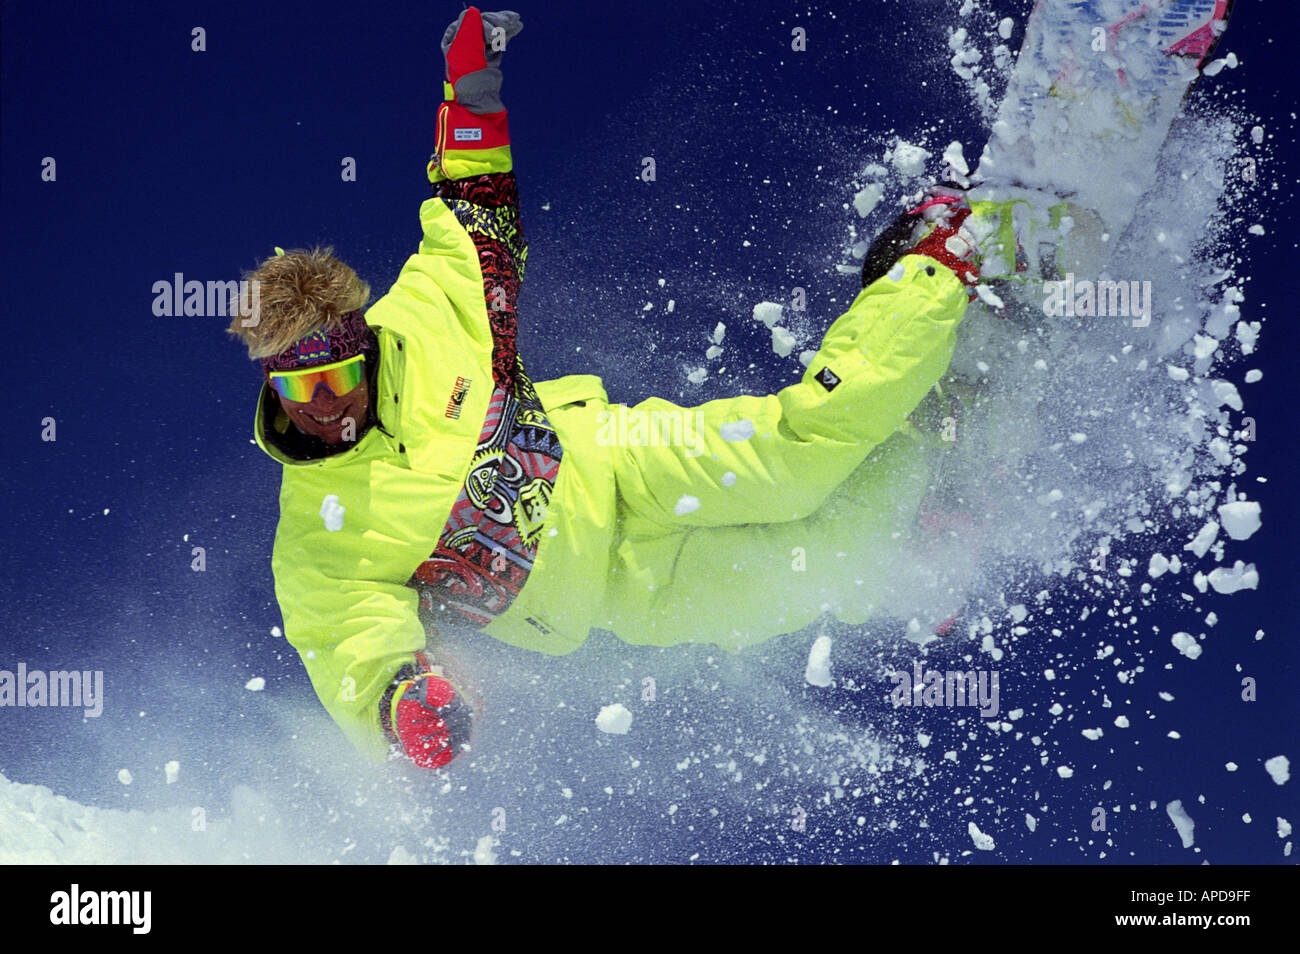 Sport Winter Sports Snowboarding Stock Photo